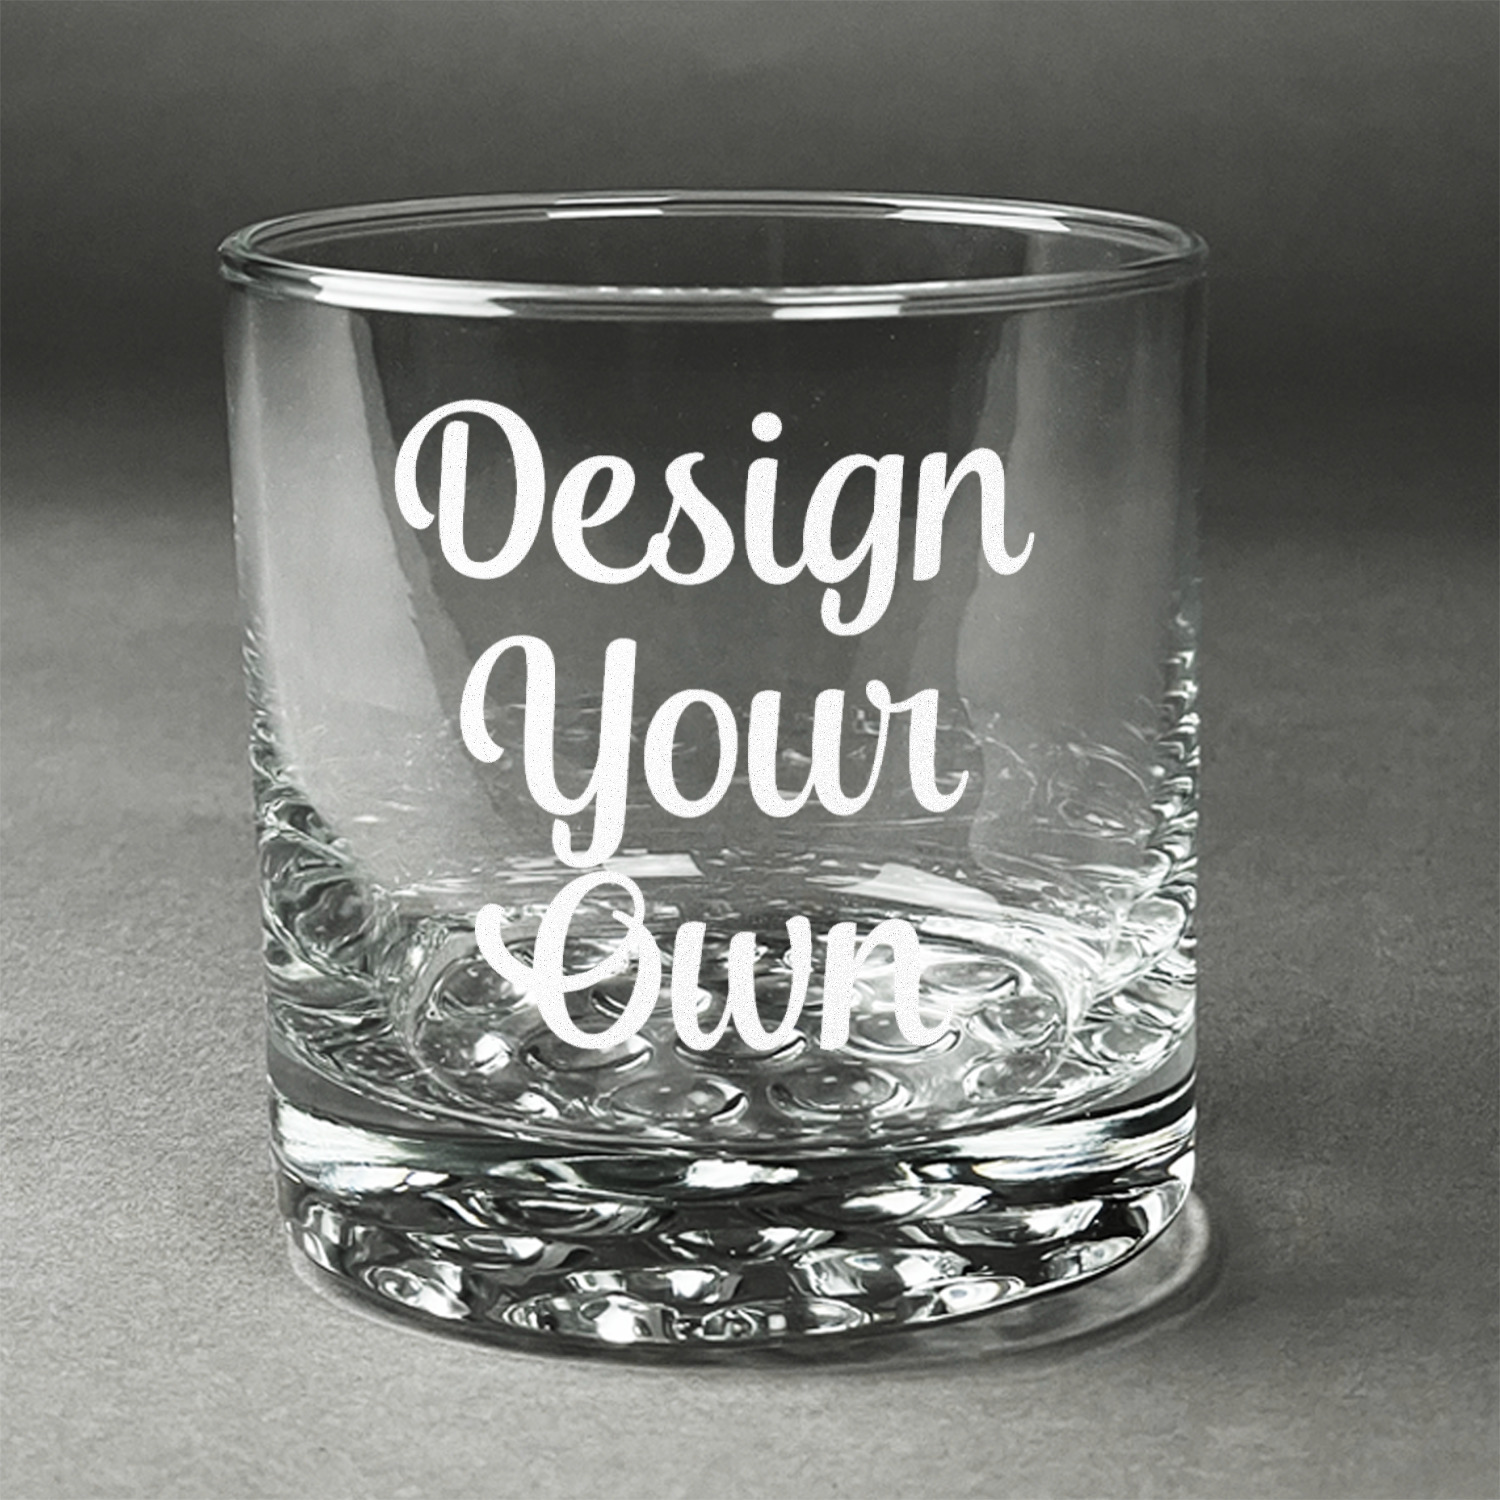 Custom Pint Glasses - Laser Engraved - Set of 4, Design & Preview Online